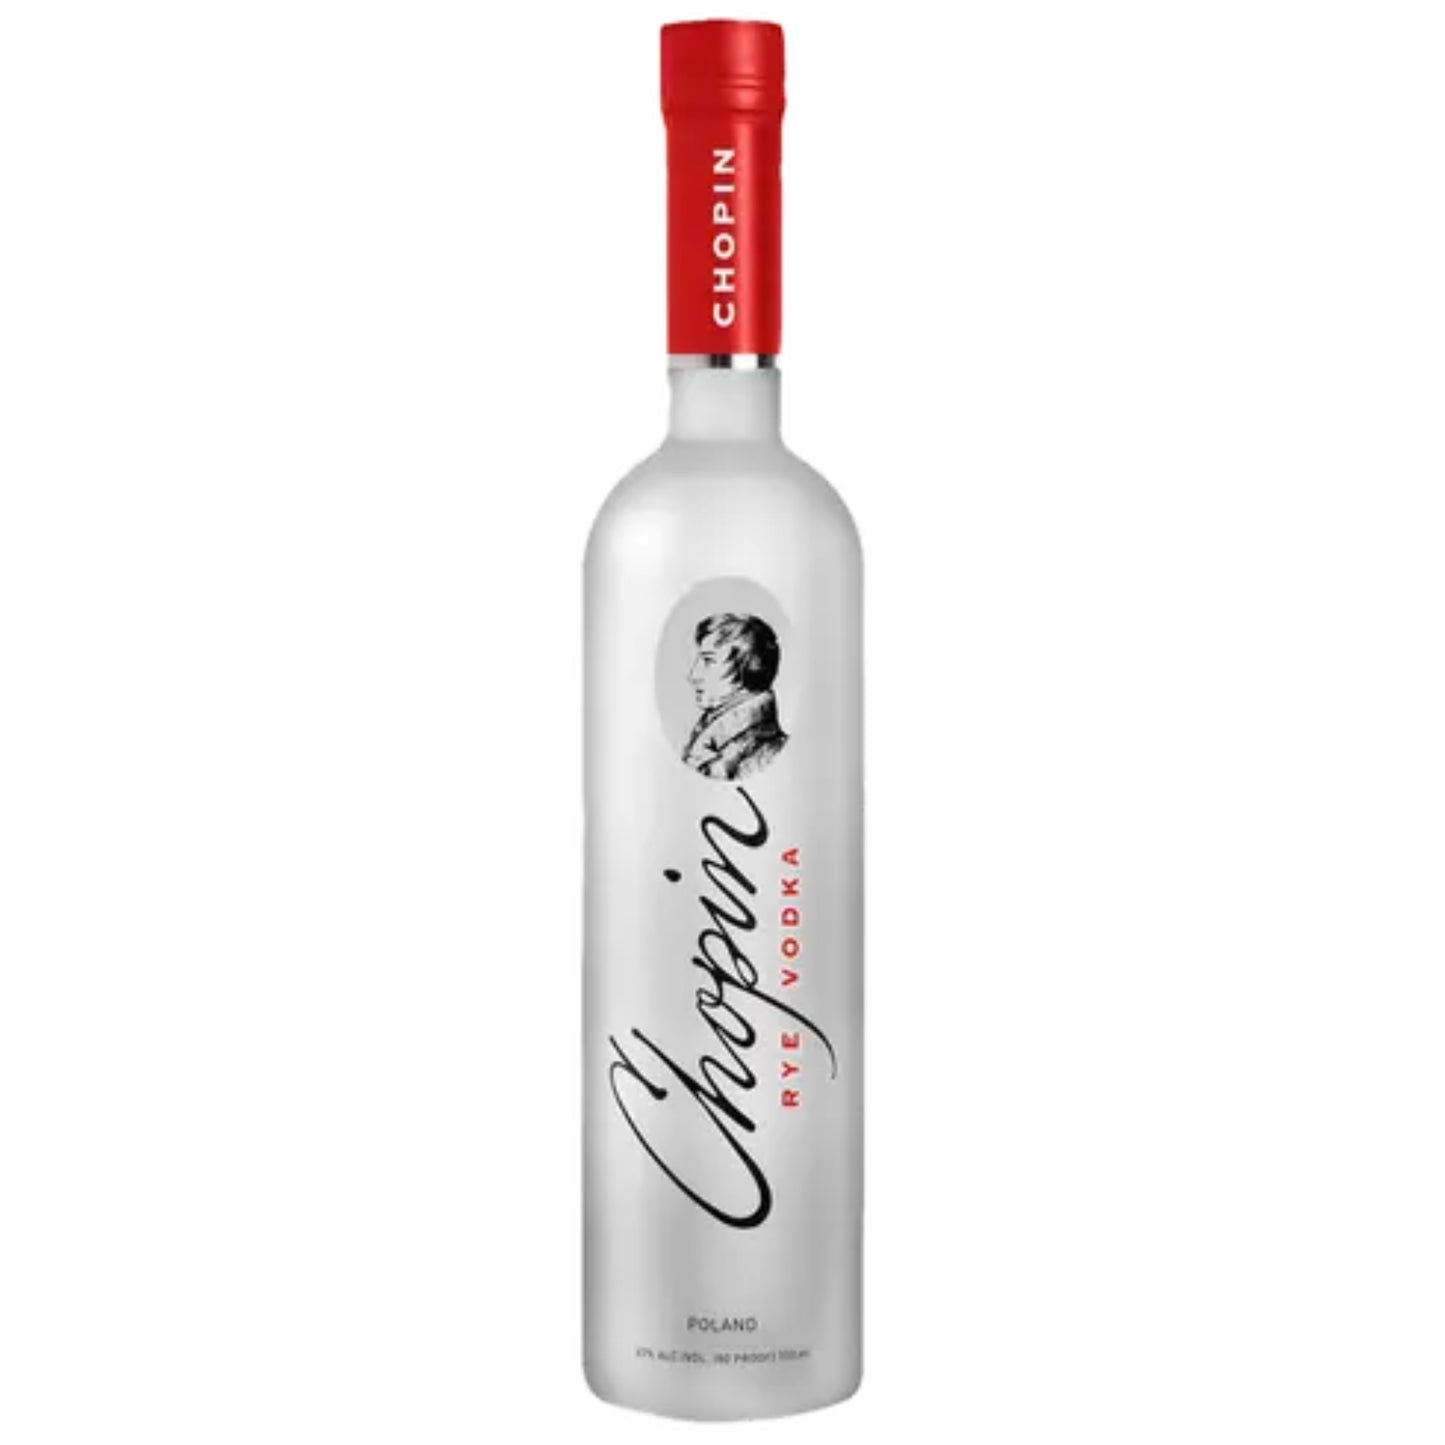 Chopin Rye Vodka - Liquor Geeks